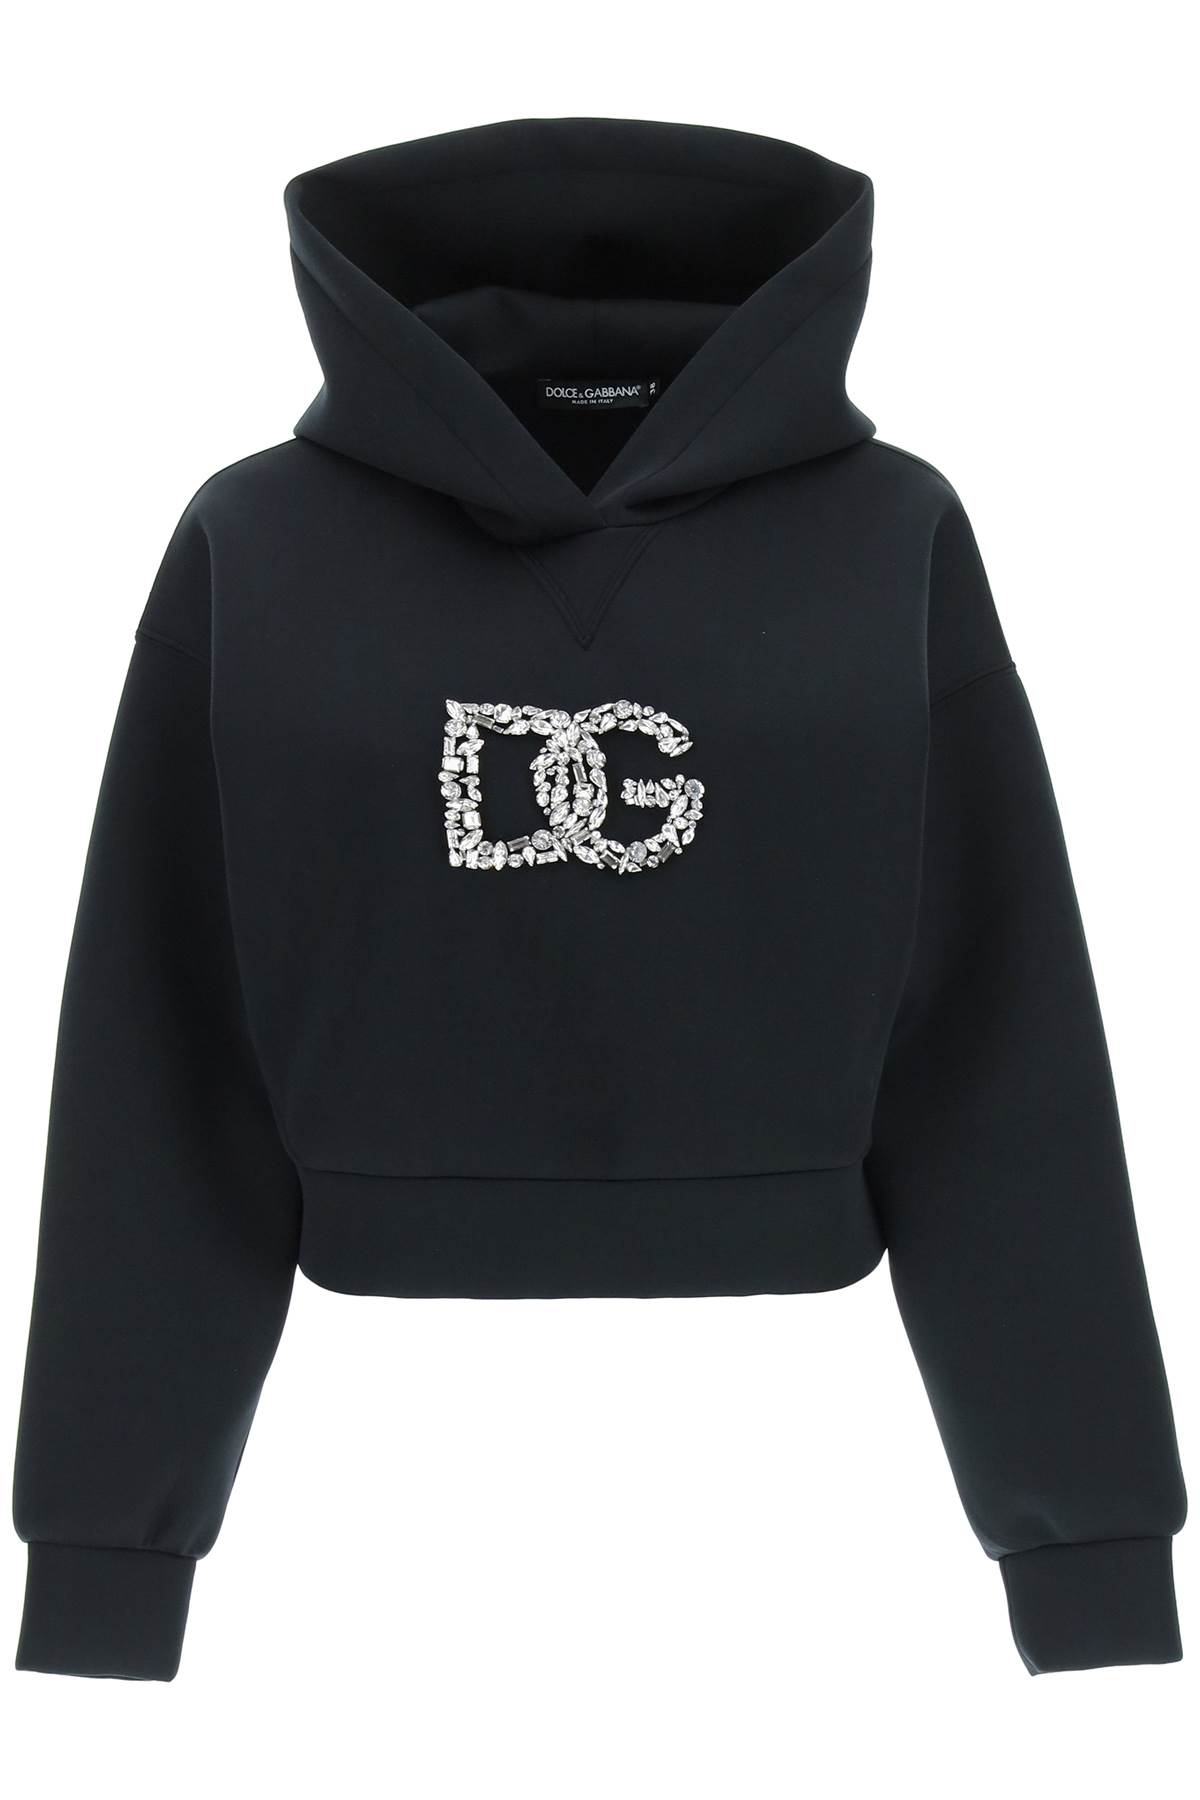 Dolce & Gabbana Sweatshirt With Crystal Dg Logo